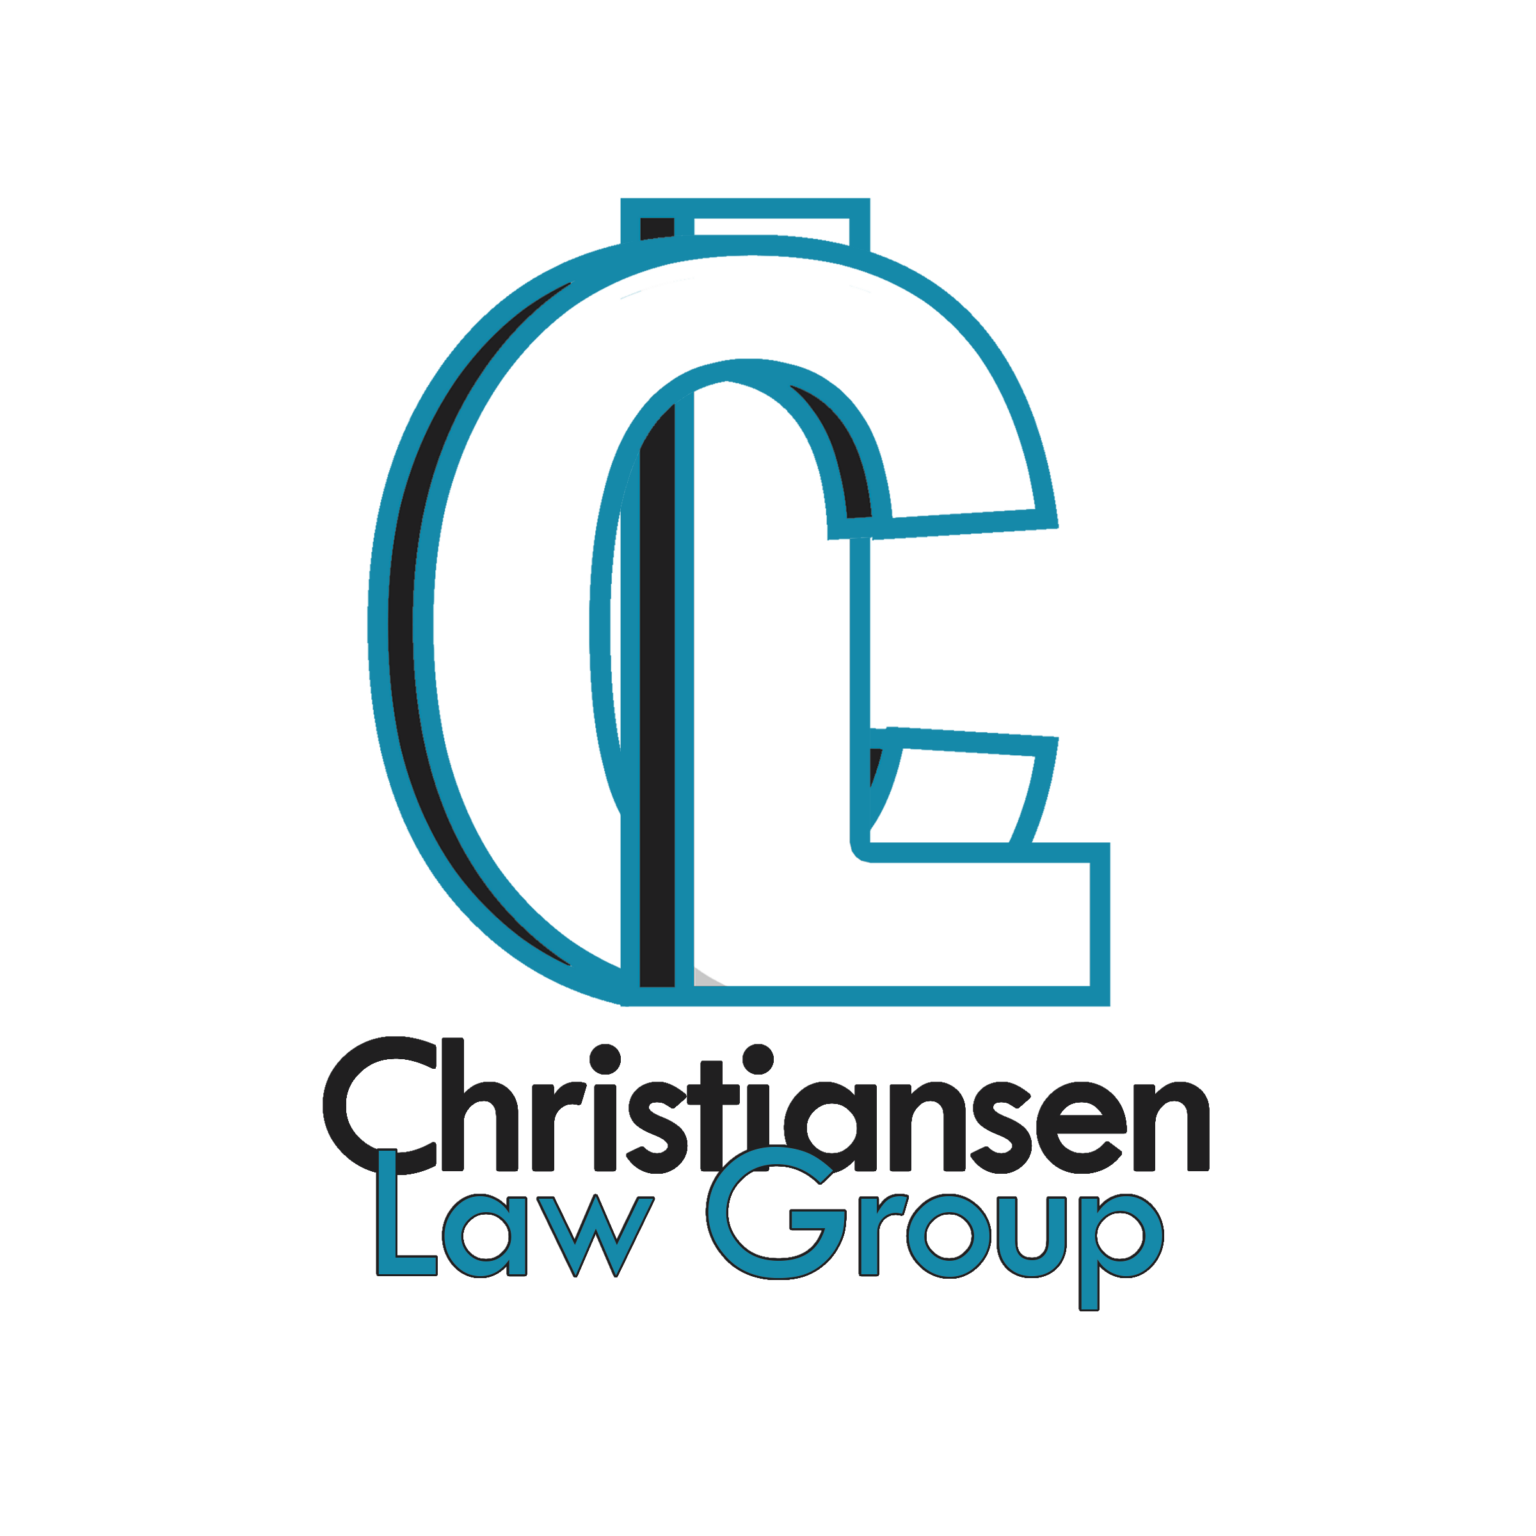 Christiansen Law Group